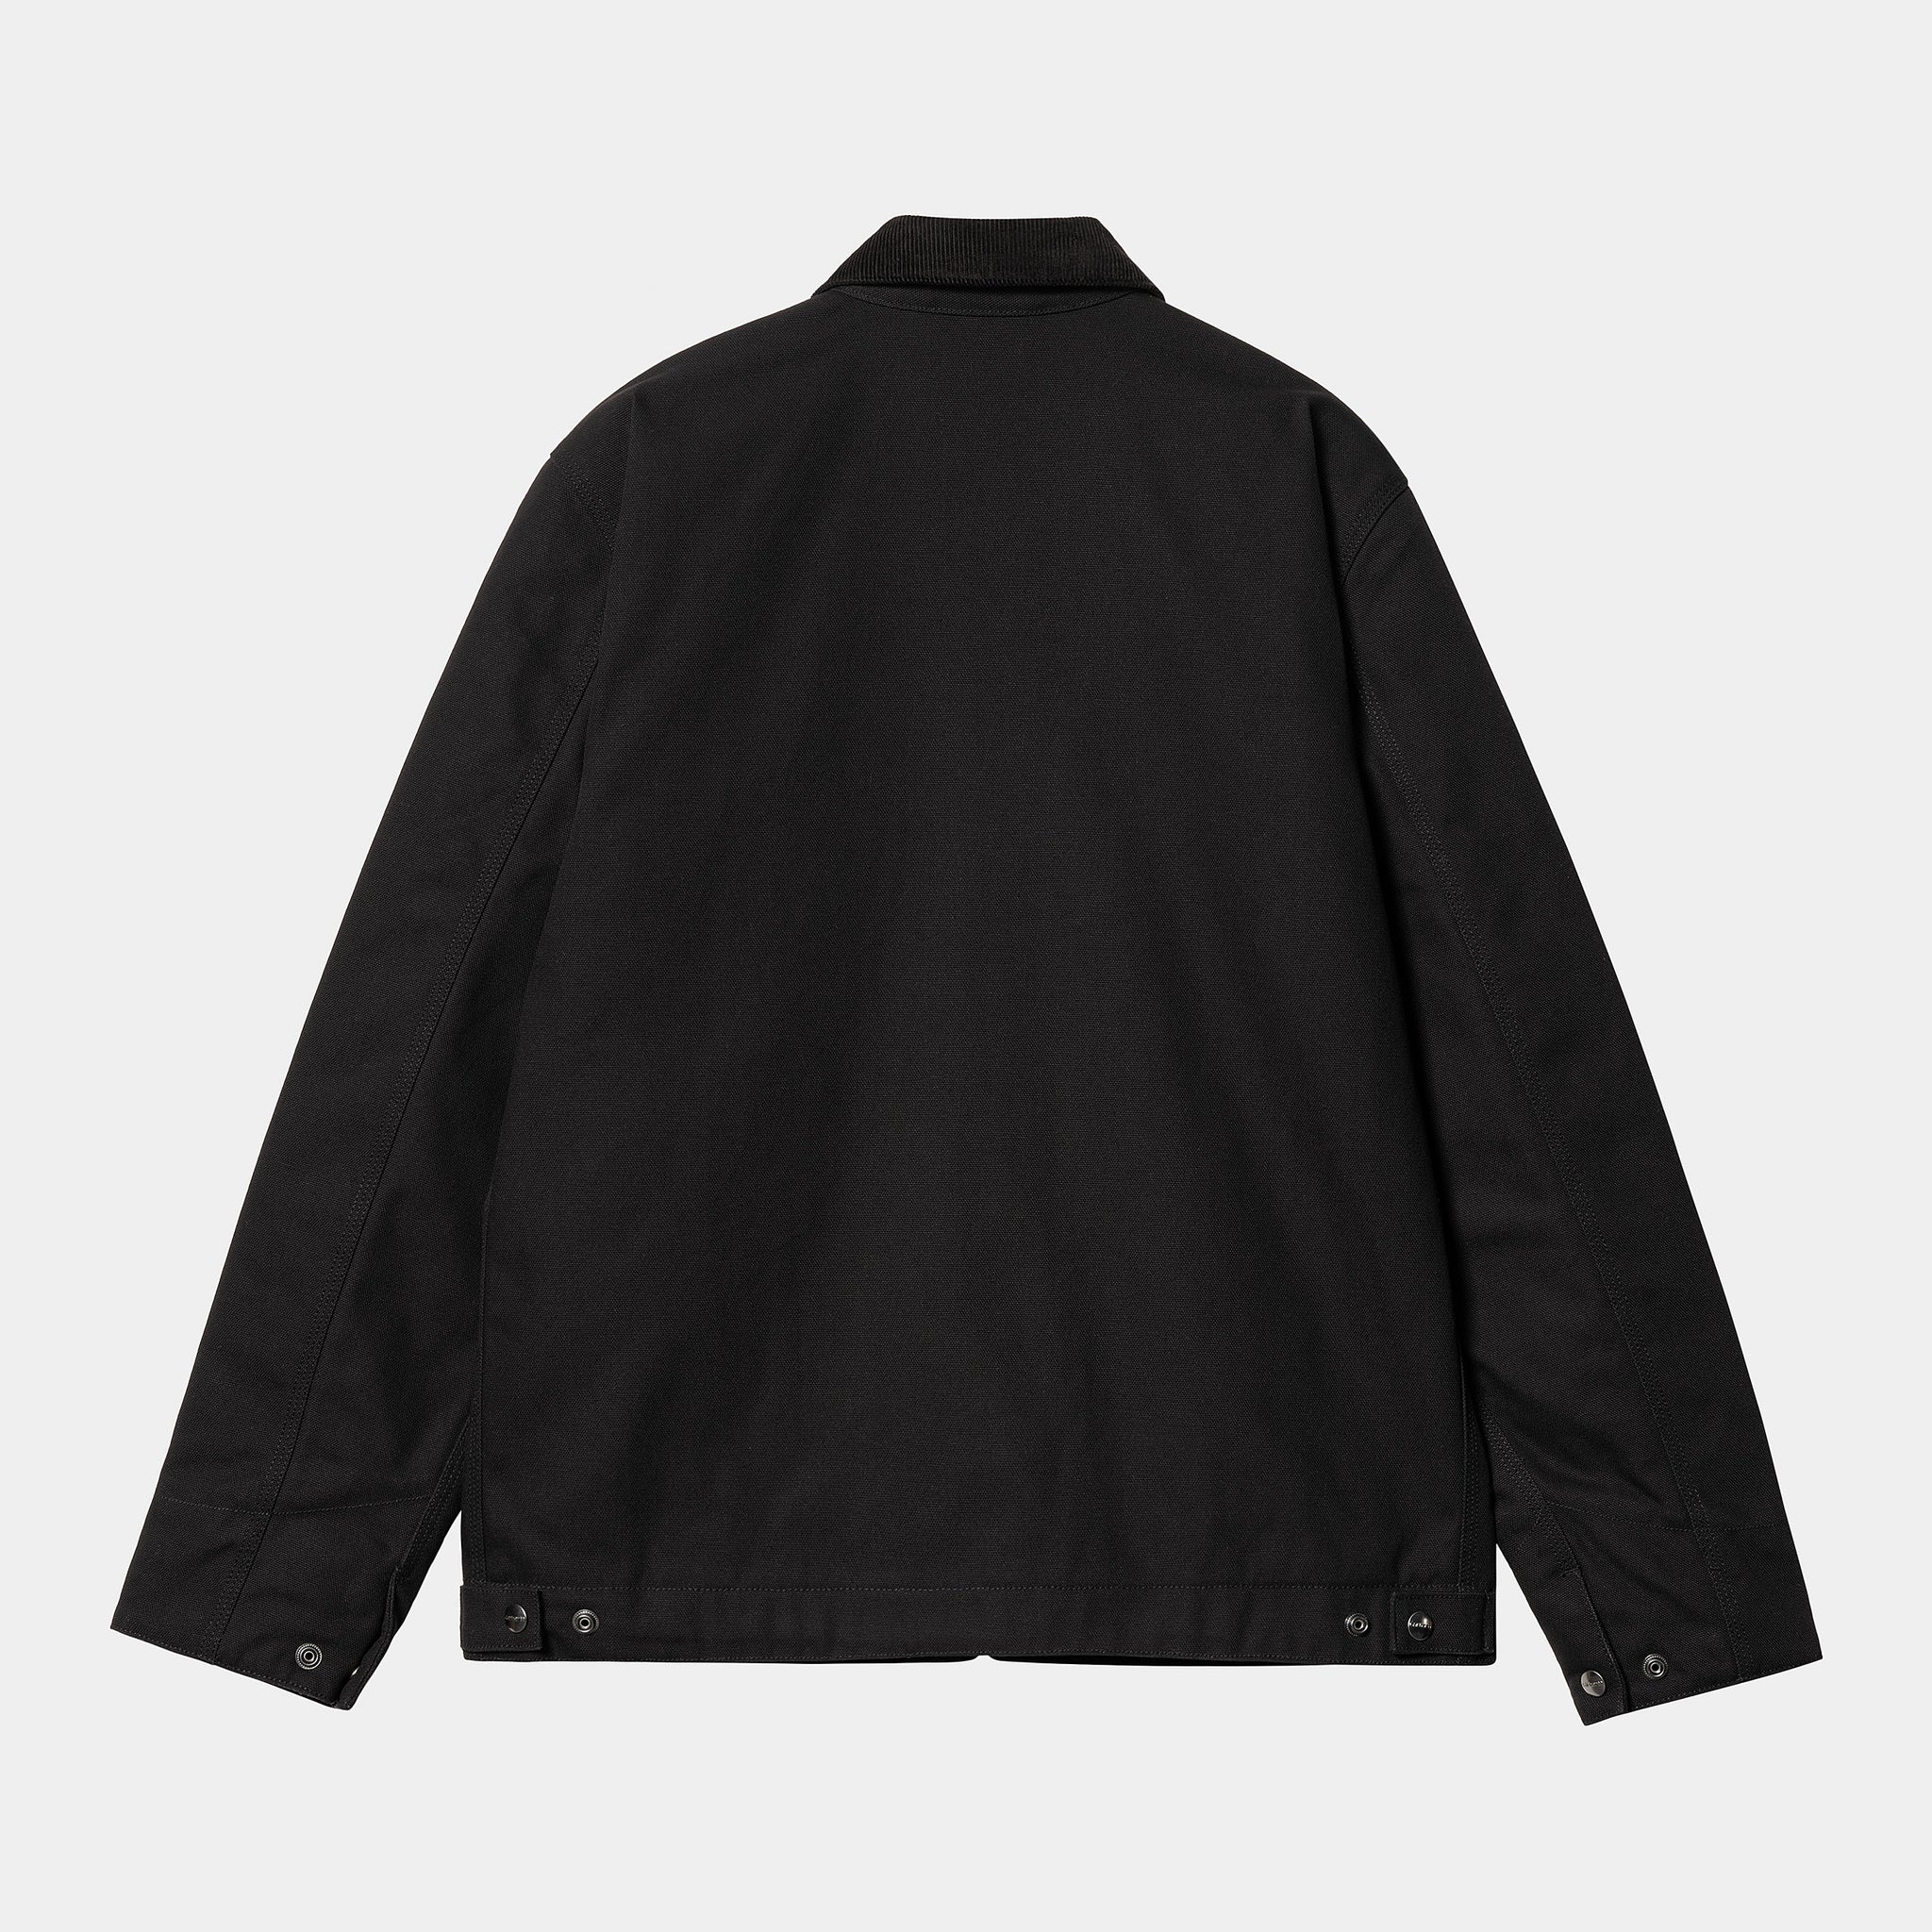 Carhartt WIP Detroit Jacket (Black/Black rigid)